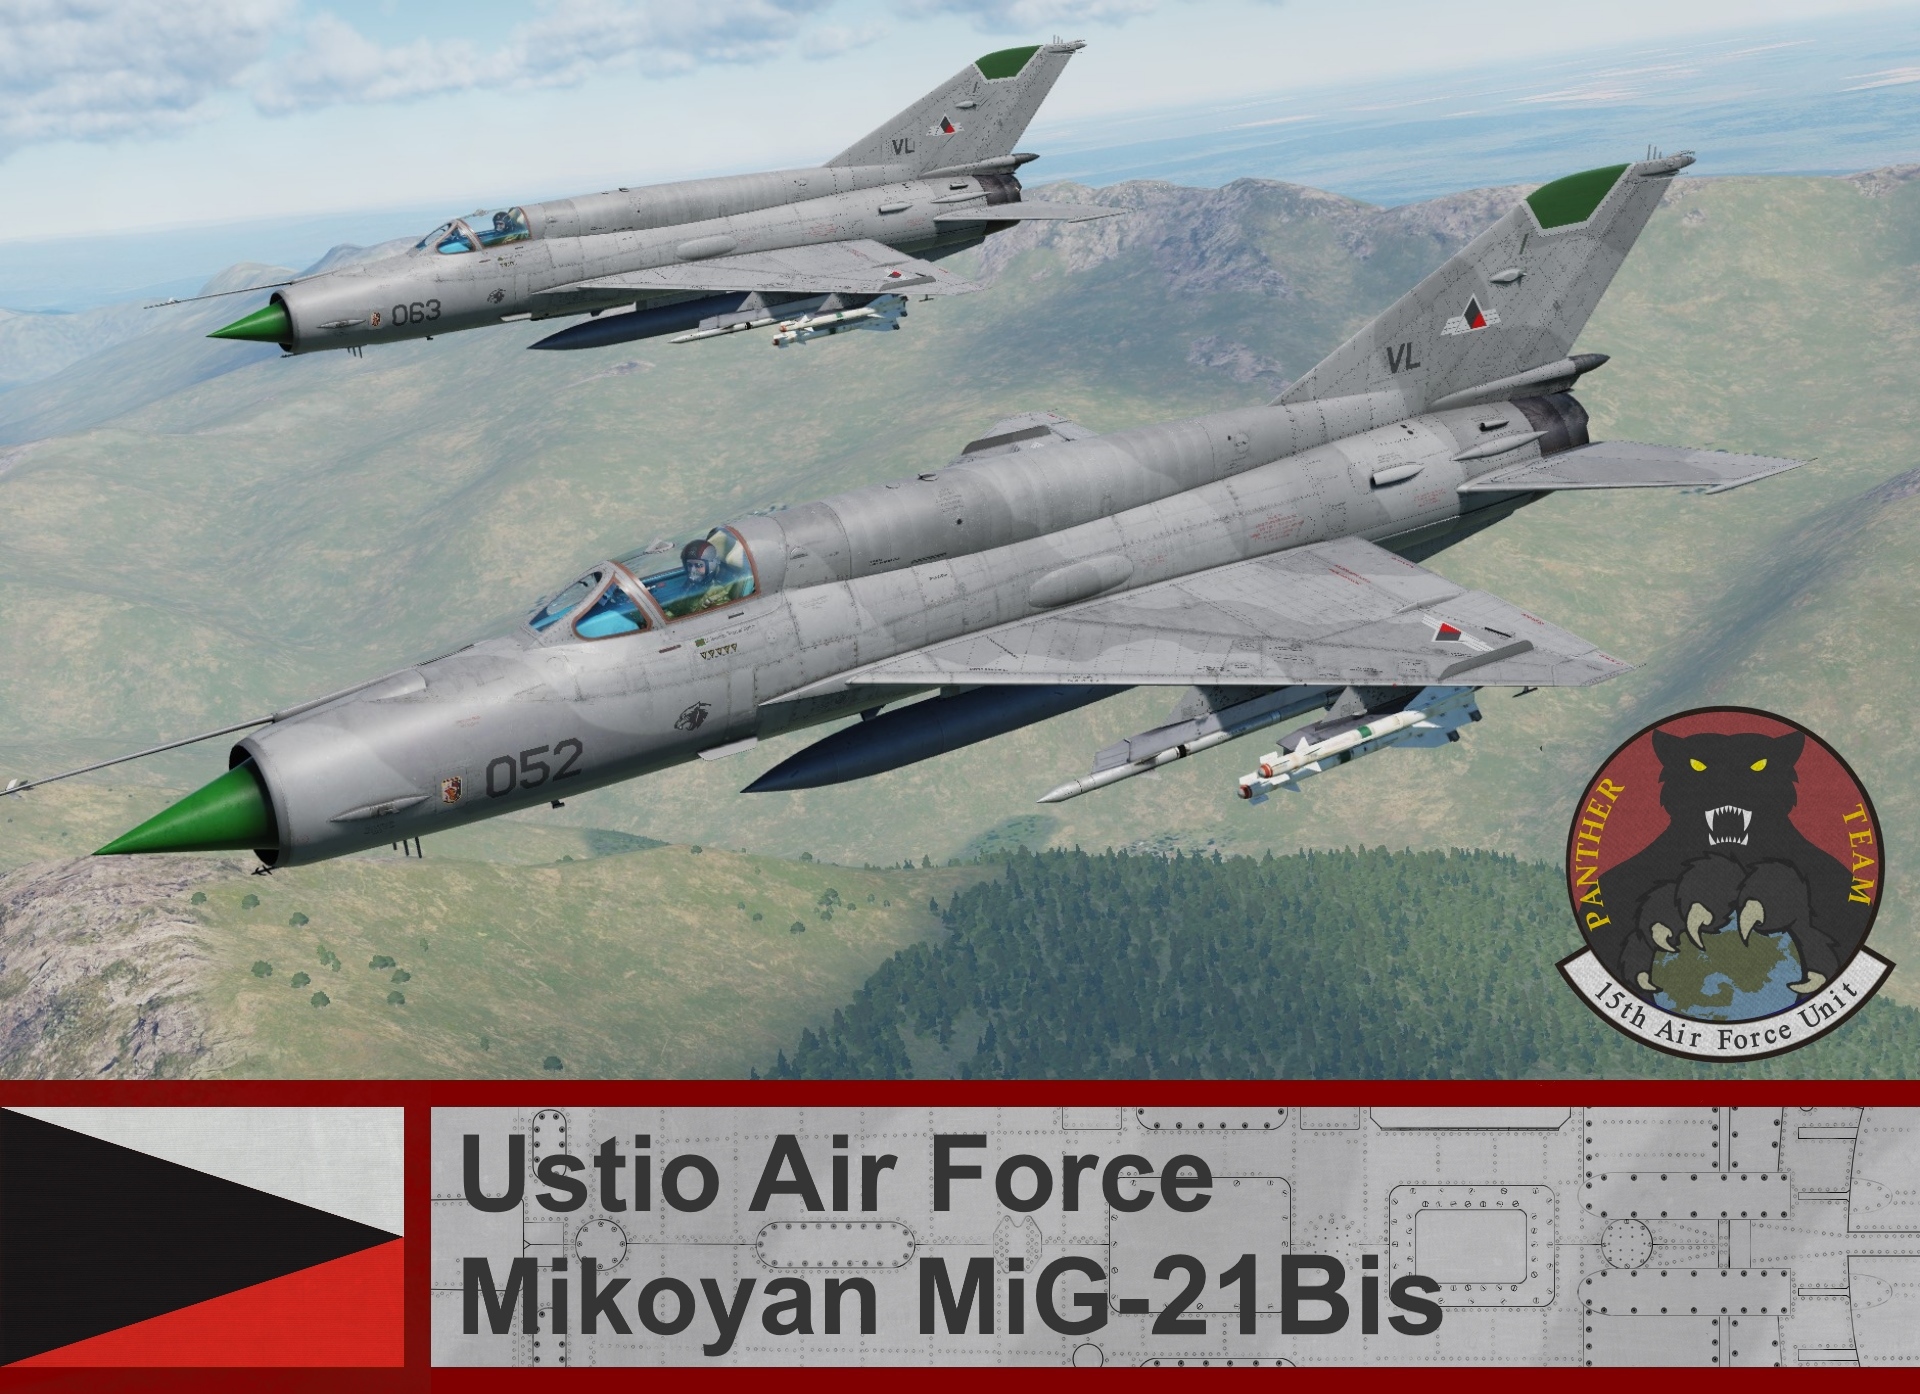 Ustio Air Force Mig-21Bis - Ace Combat Zero (15th AFU) *UPDATED*